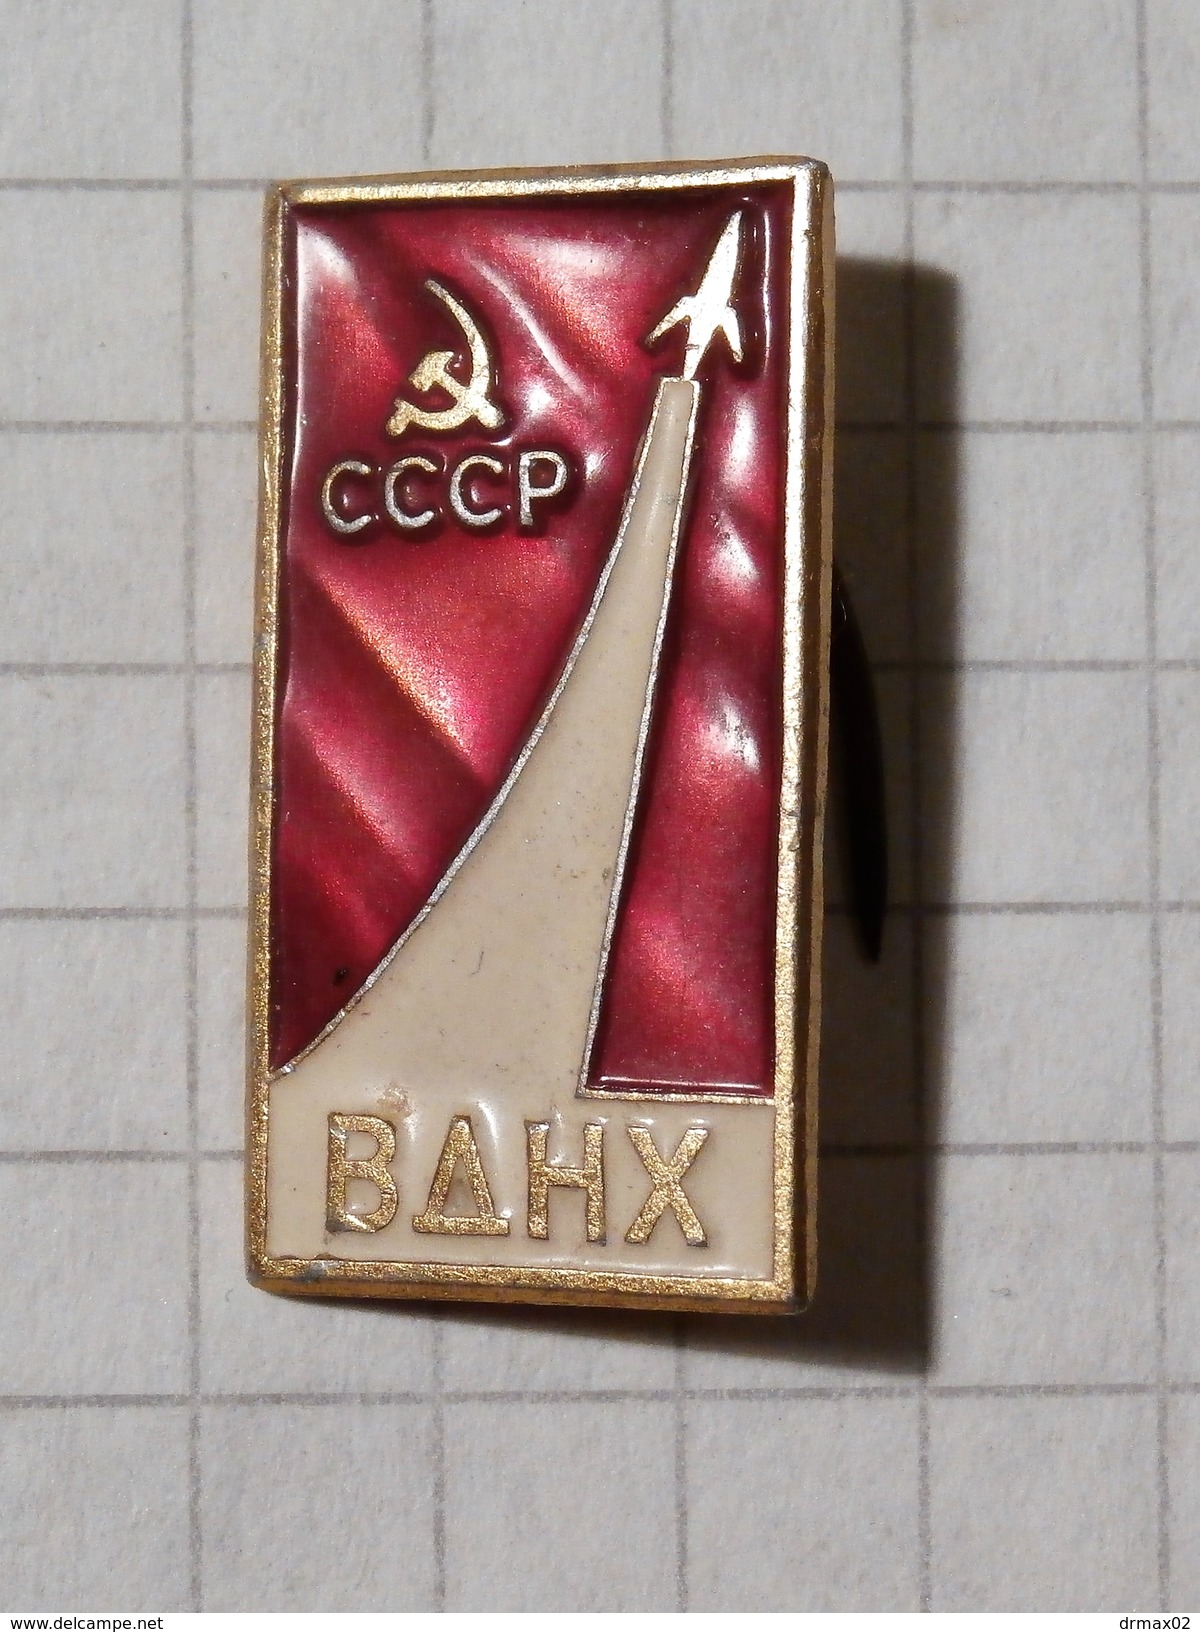 ROCKET VDNH SOVIET RUSSIAN SPACE / USSR - Espacio